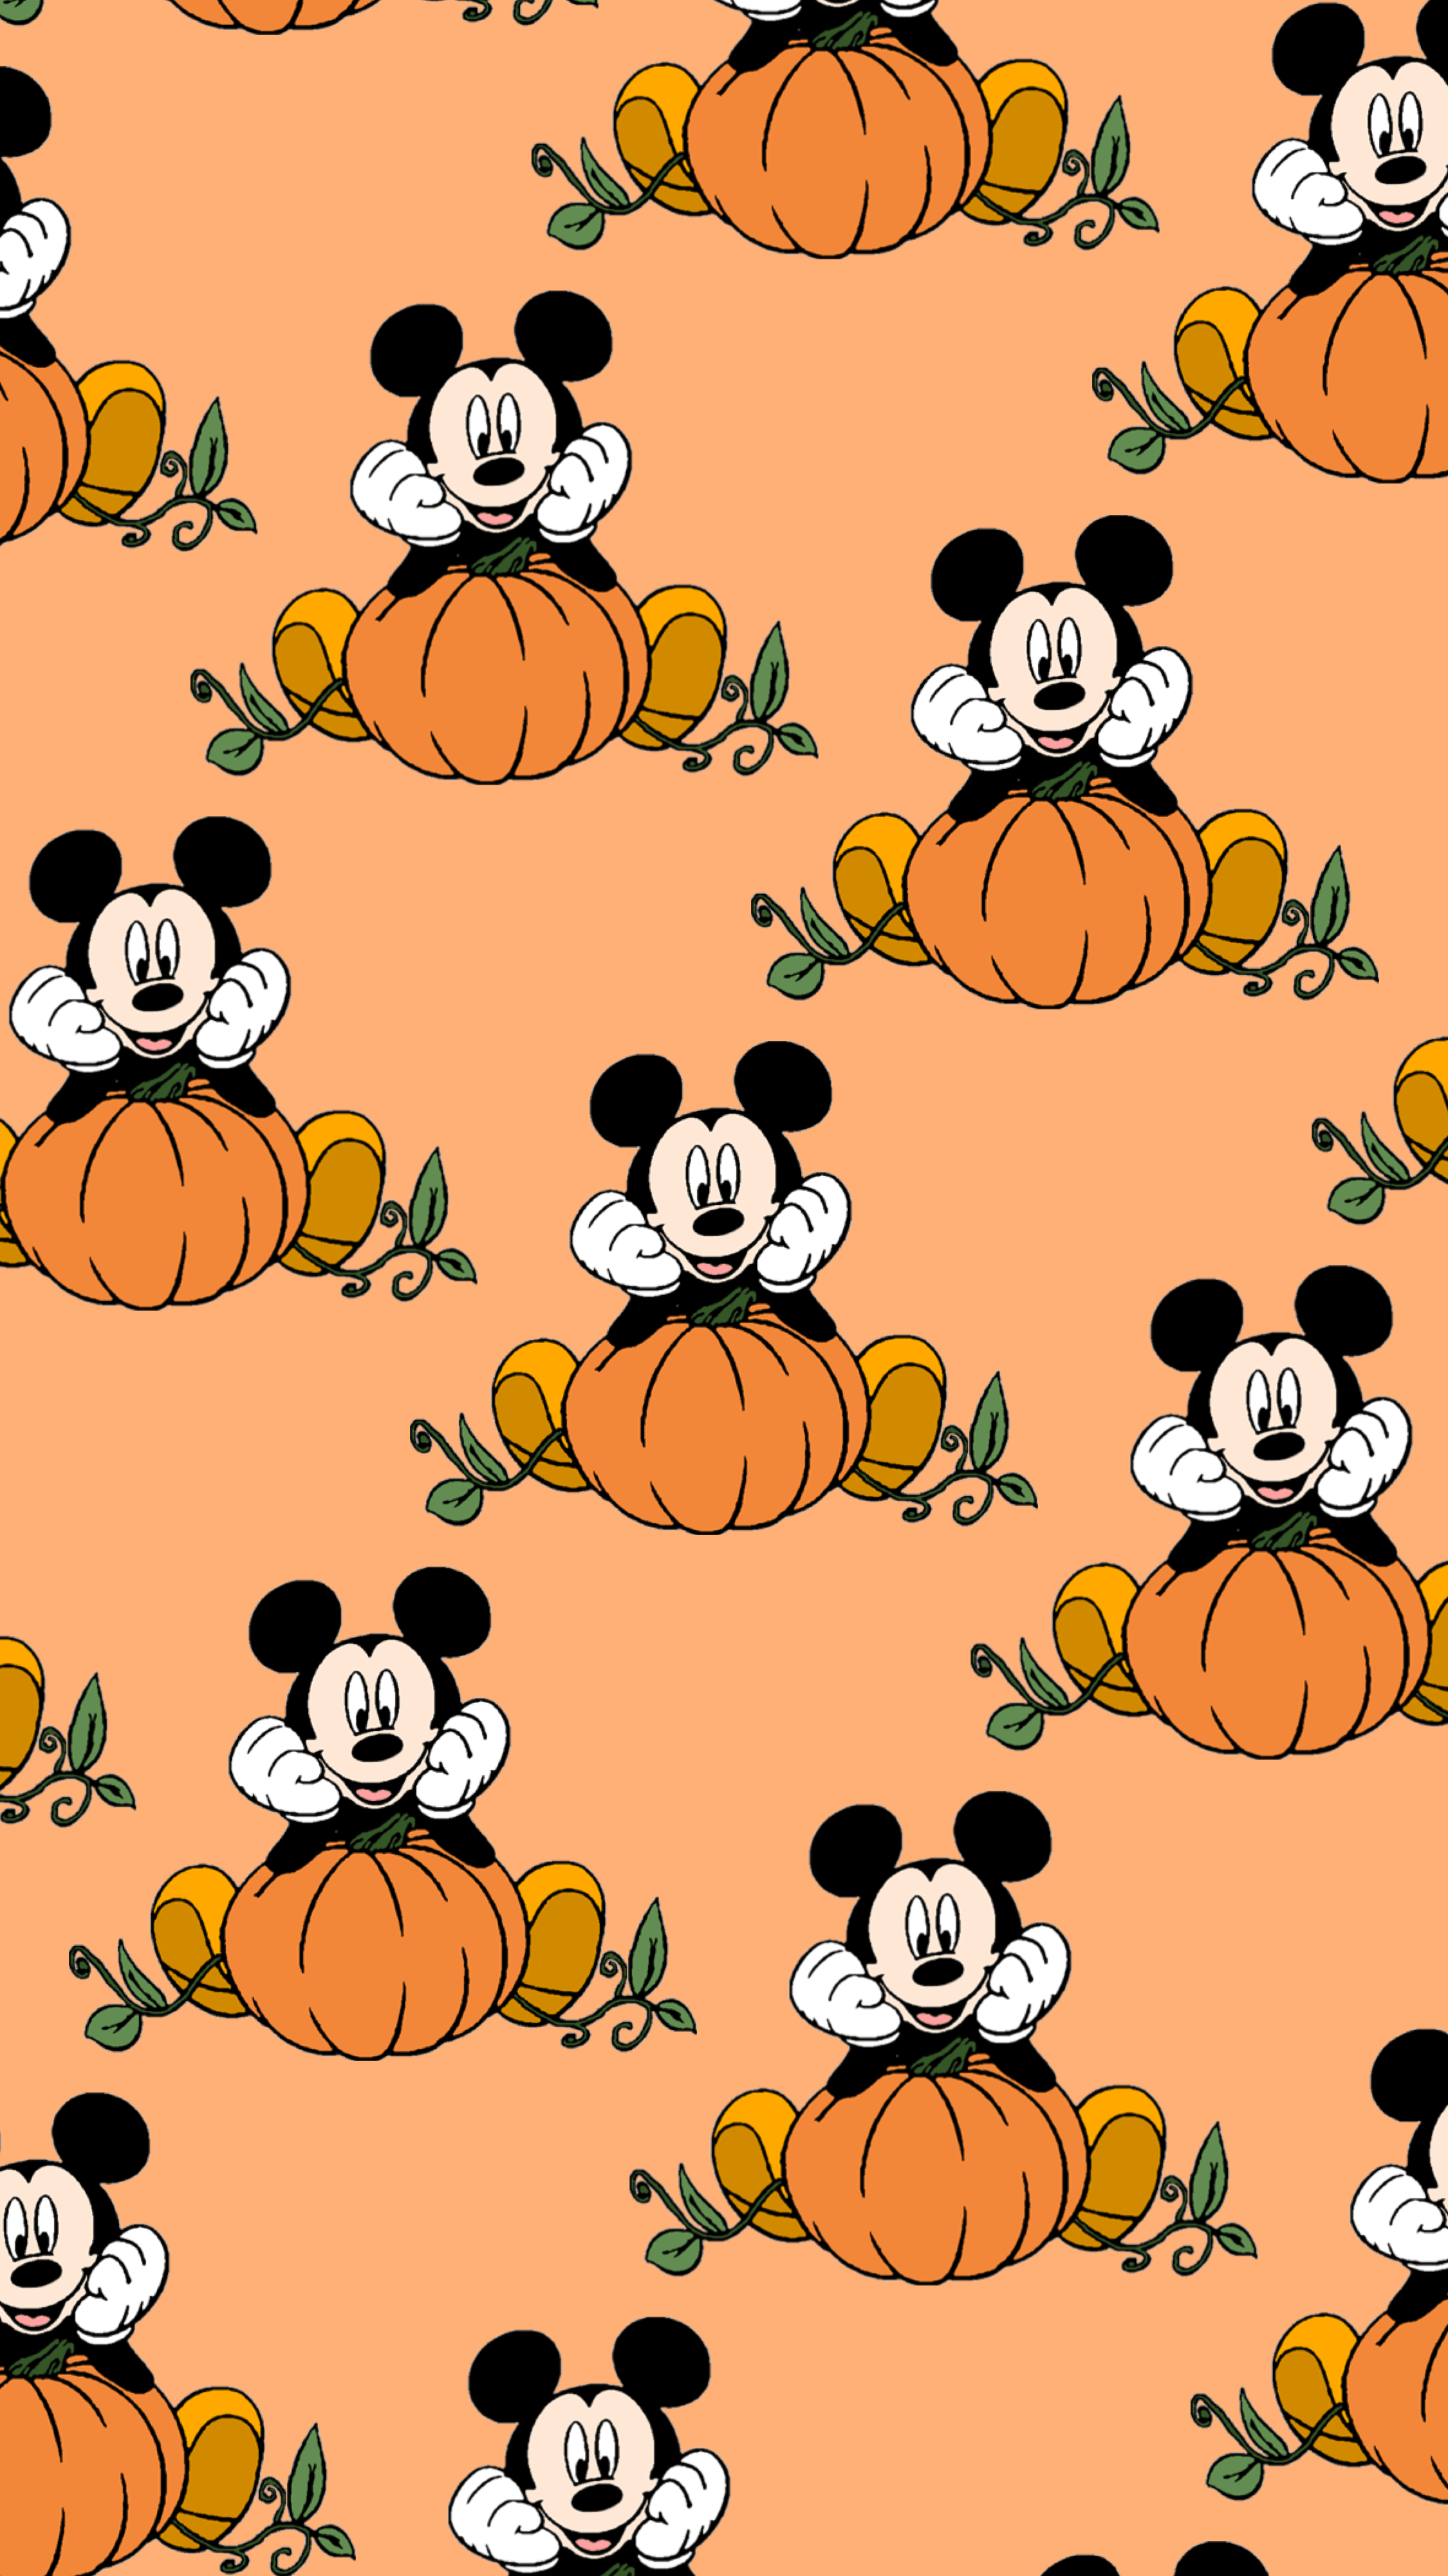 Minnie's Wallpaper of Mickey. Fall wallpaper, Cute fall wallpaper, Halloween wallpaper iphone